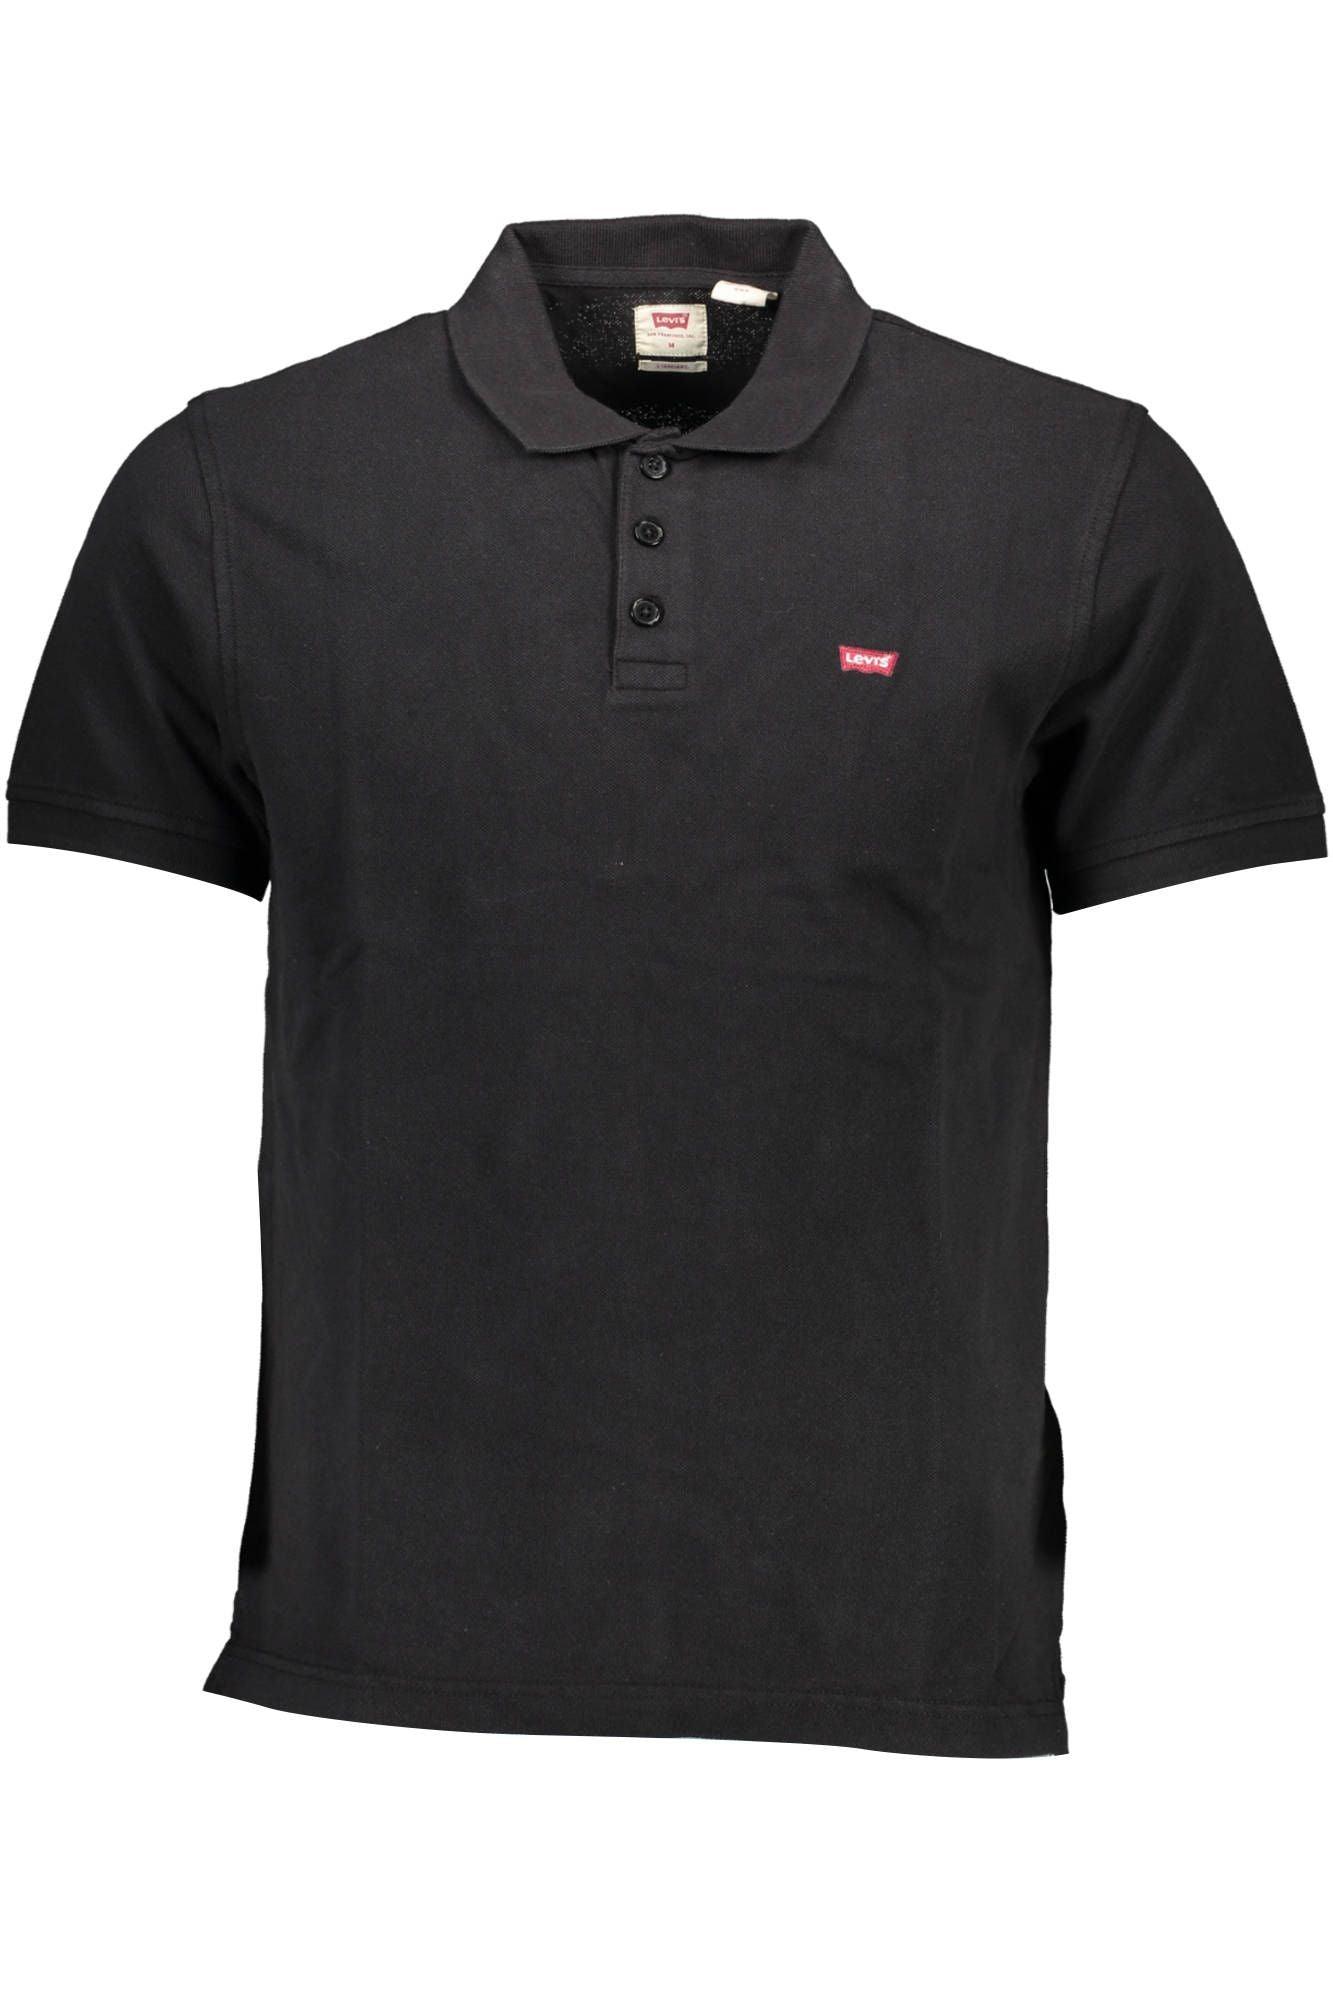 Levi's Sleek Cotton Polo Shirt with Logo - PER.FASHION